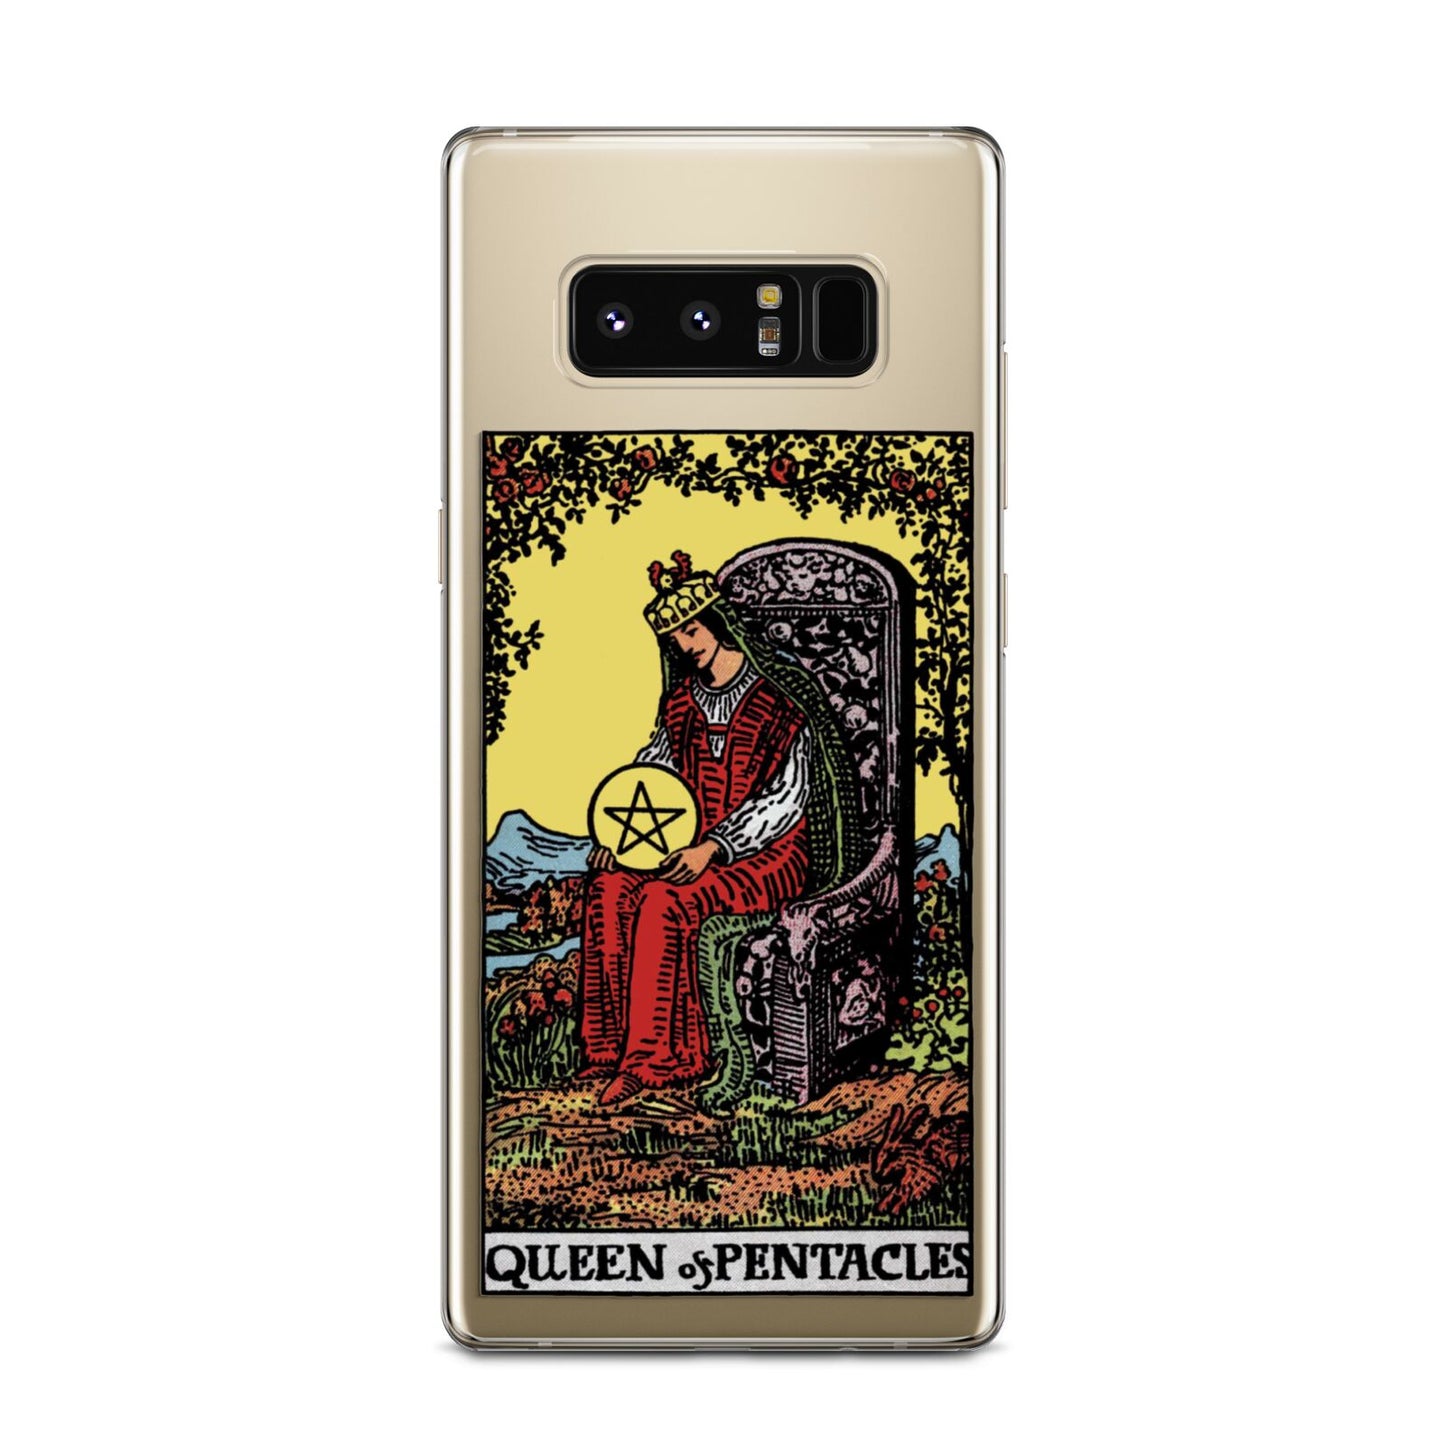 Queen of Pentacles Tarot Card Samsung Galaxy Note 8 Case